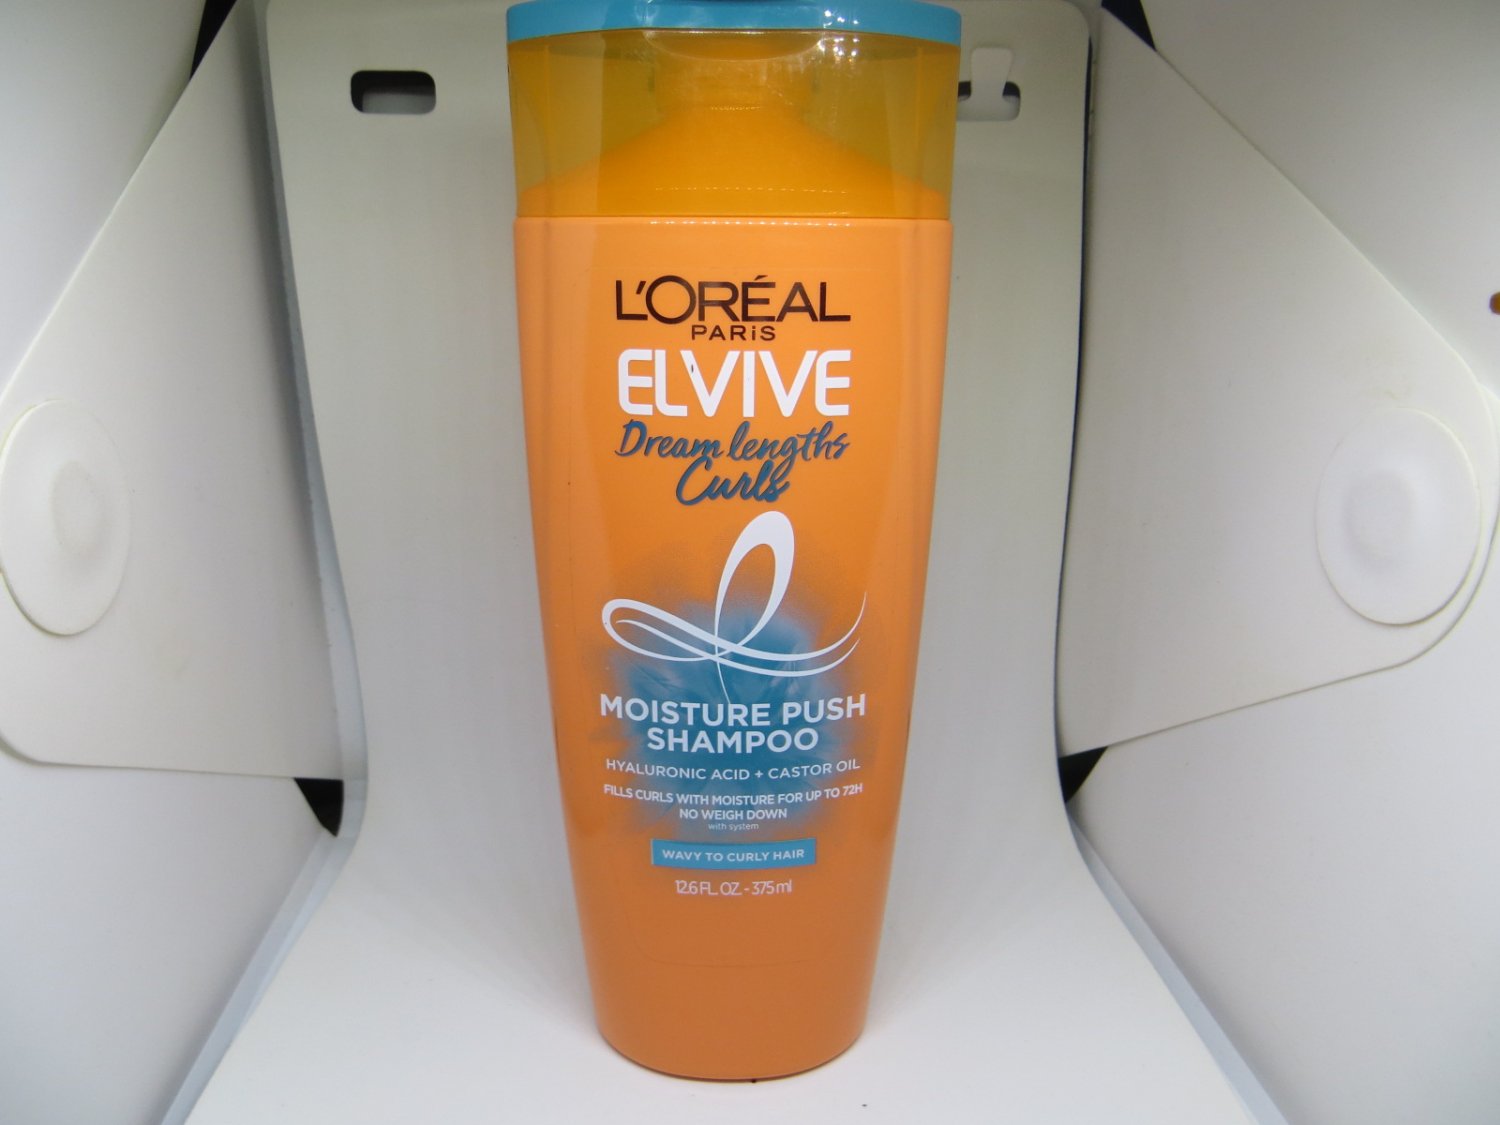 Loreal Elvive Moisture Push Shampoo, 12.6oz